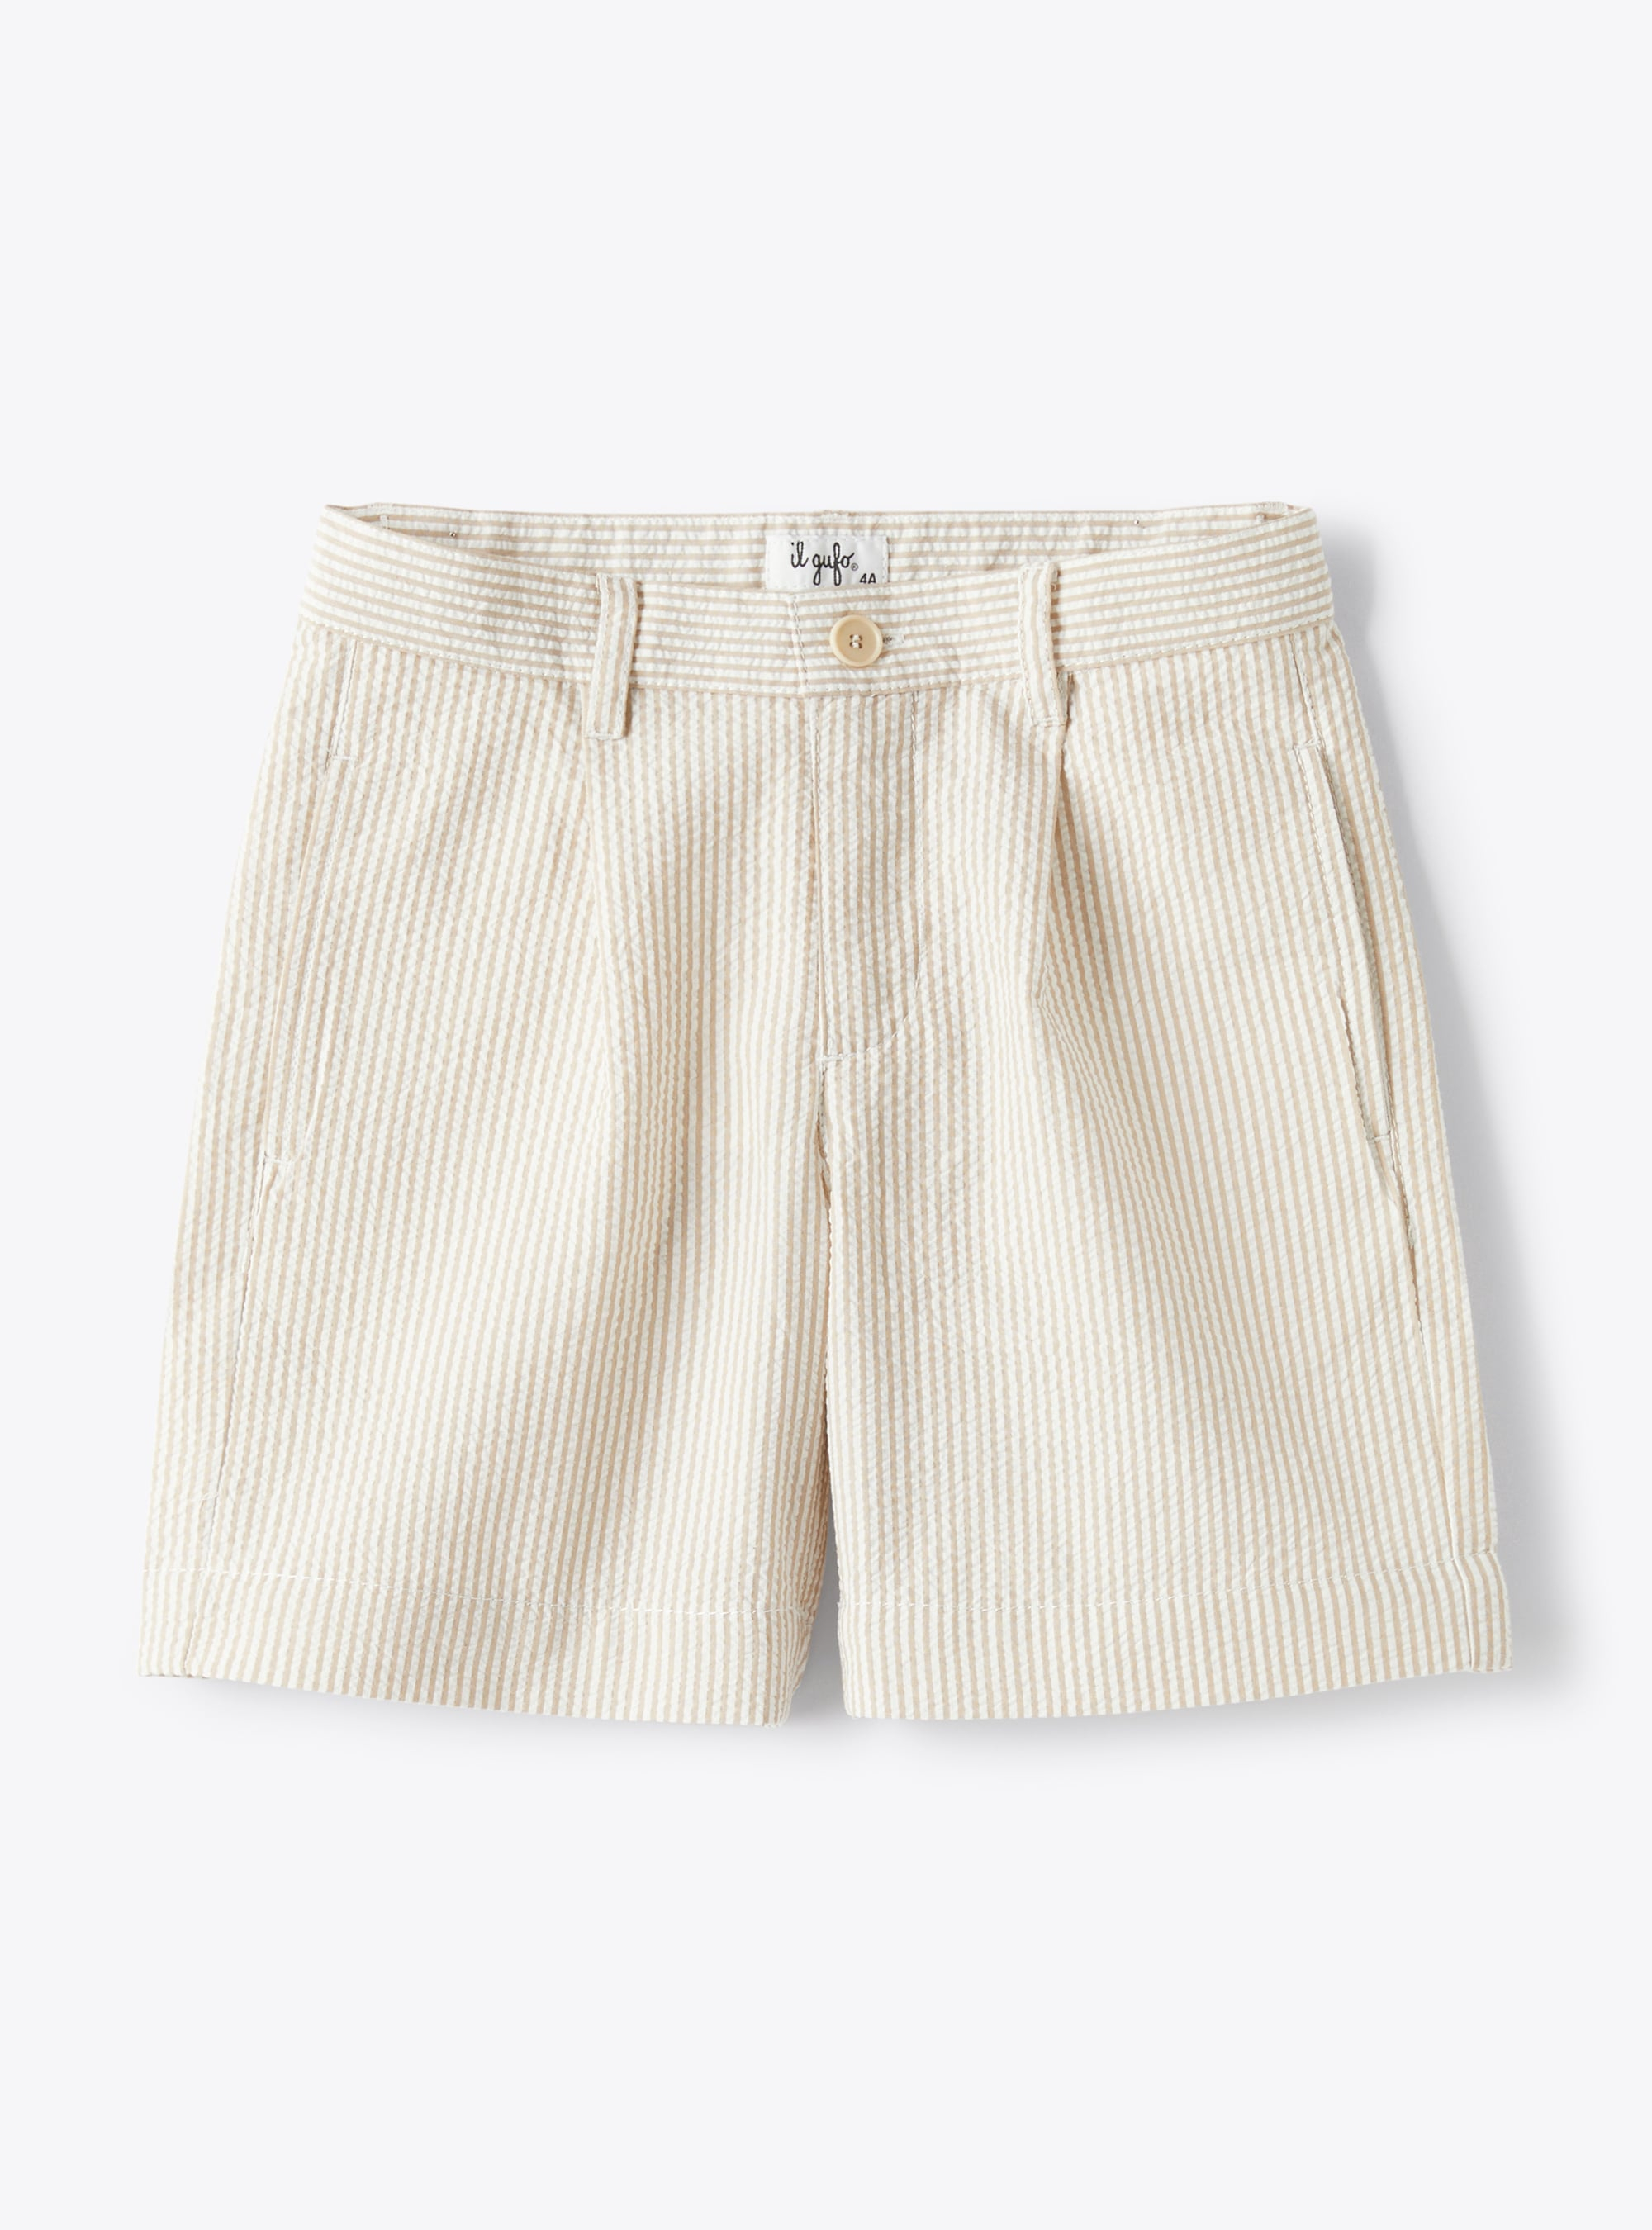 Bermuda shorts in beige-&-white striped seersucker - Trousers - Il Gufo